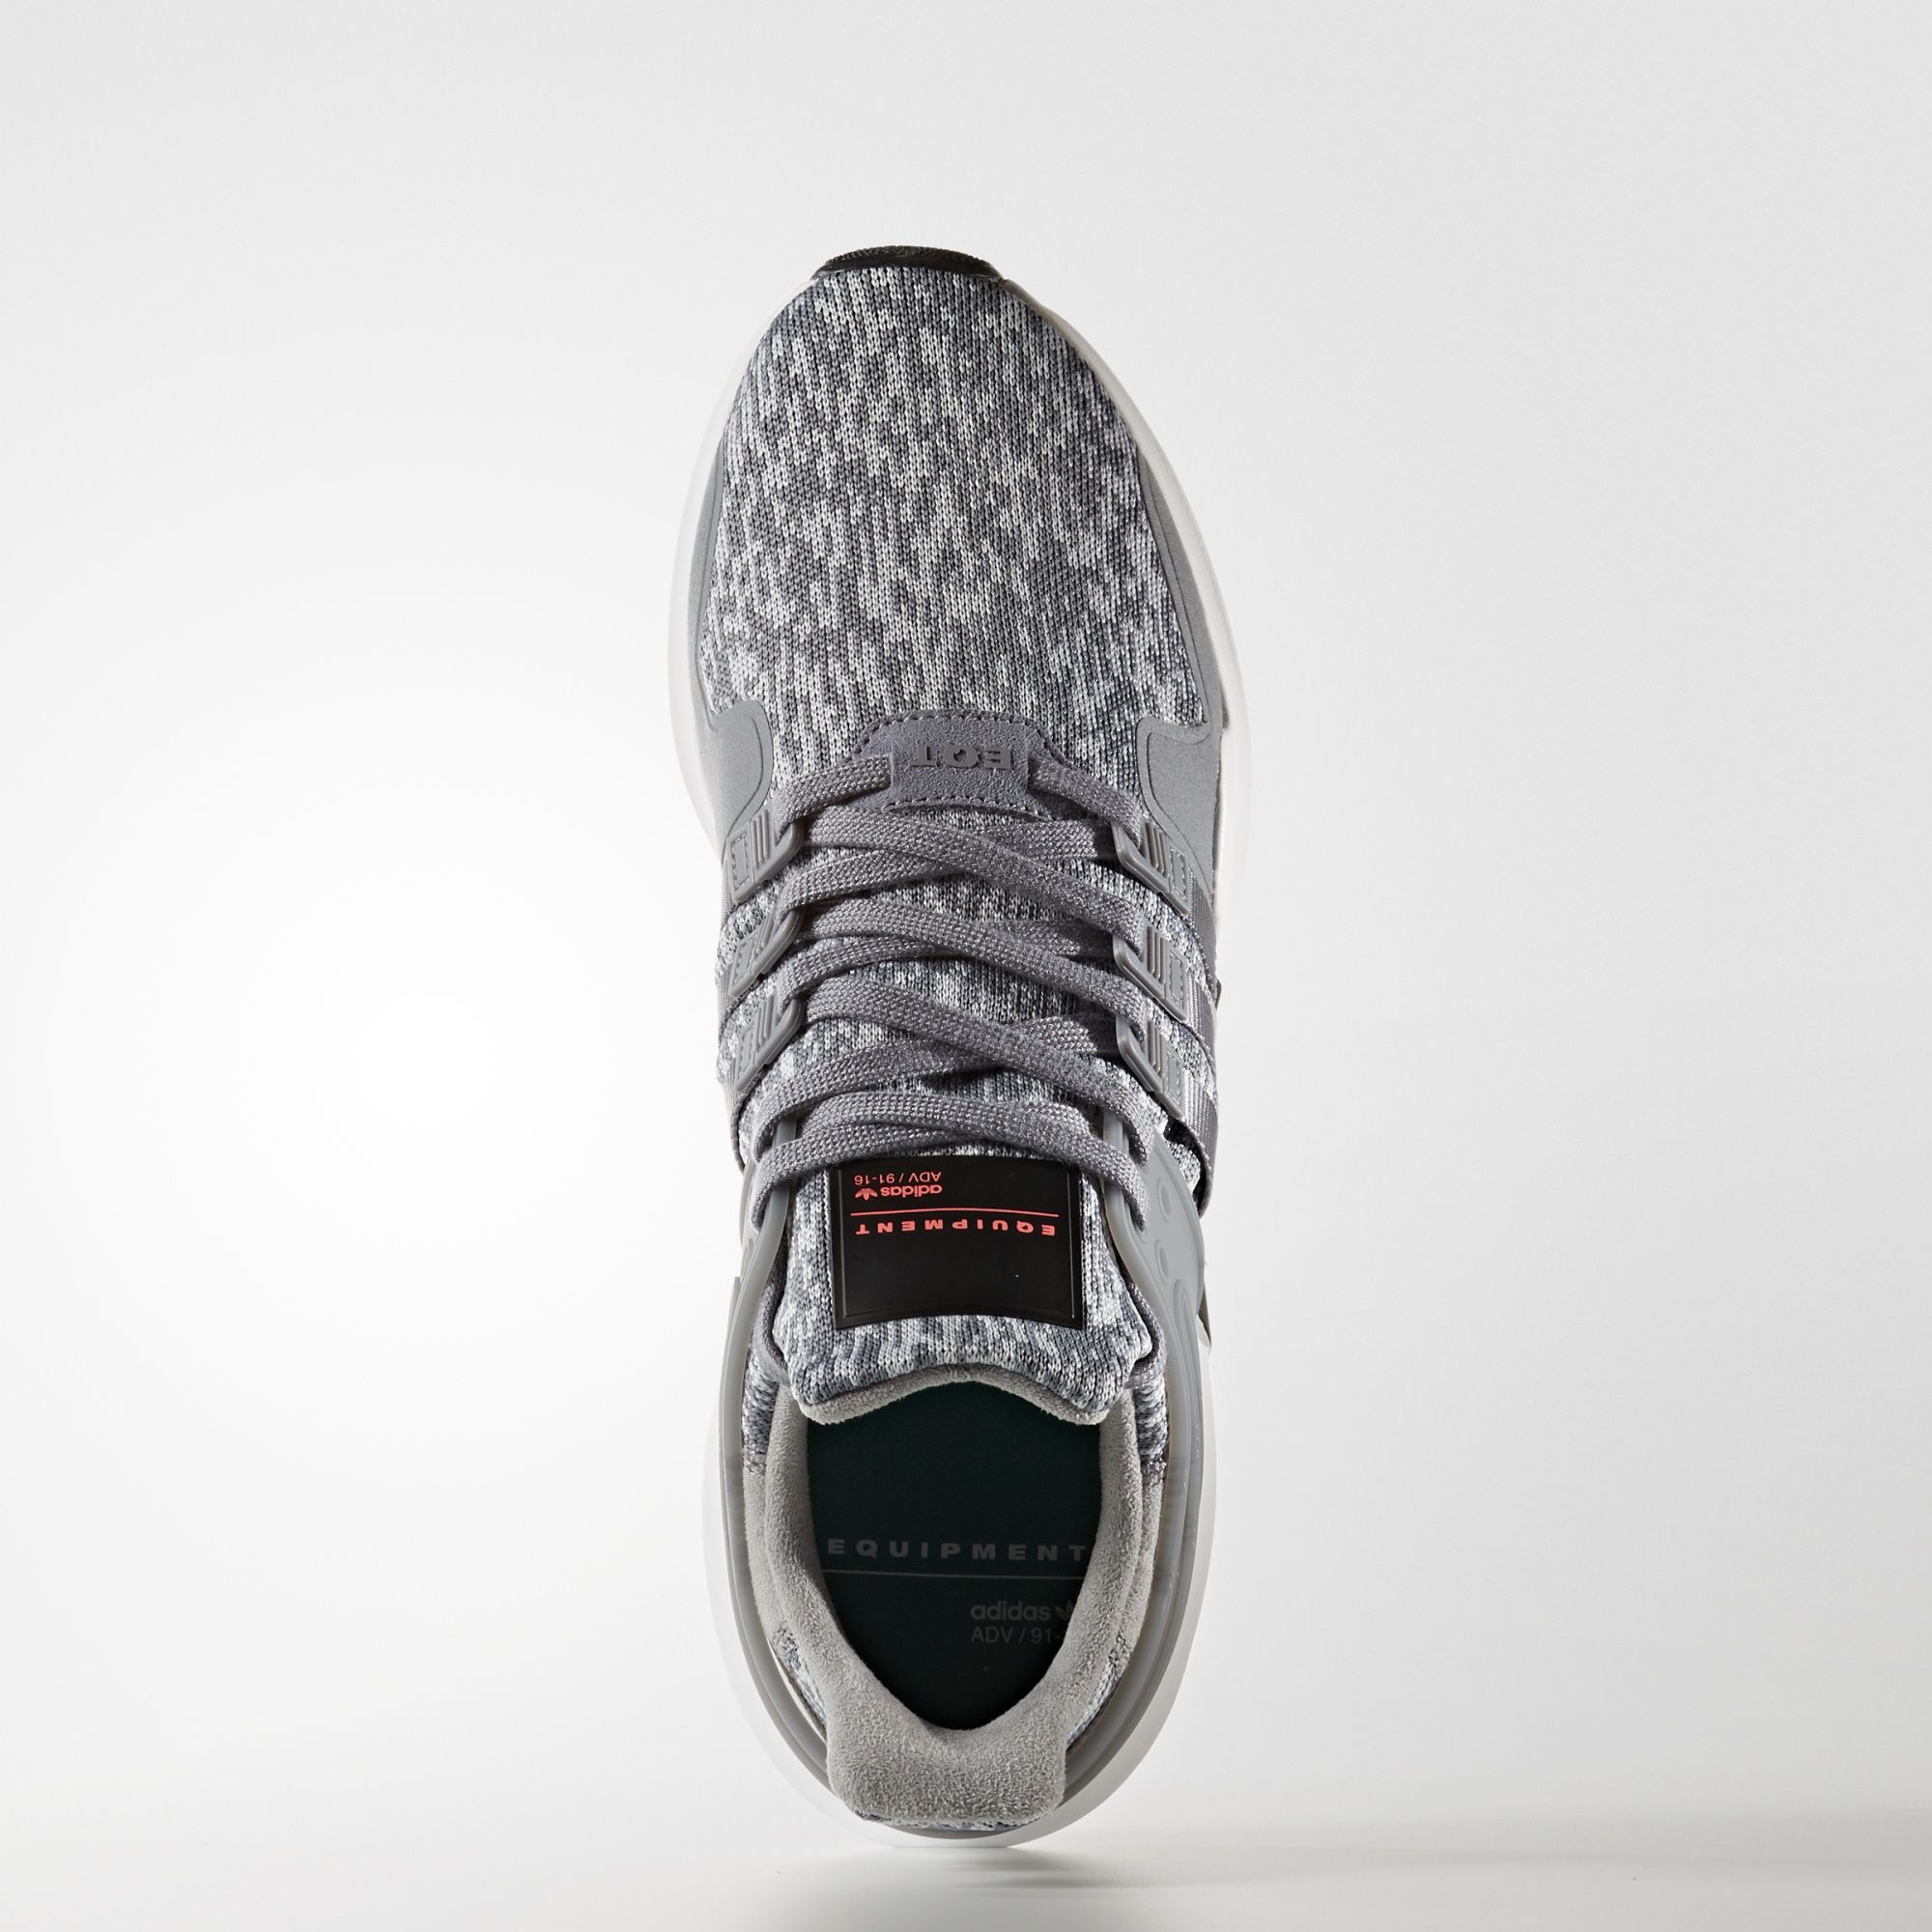 Adidas EQT Support ADV
Clear Onix / Grey / Core Black